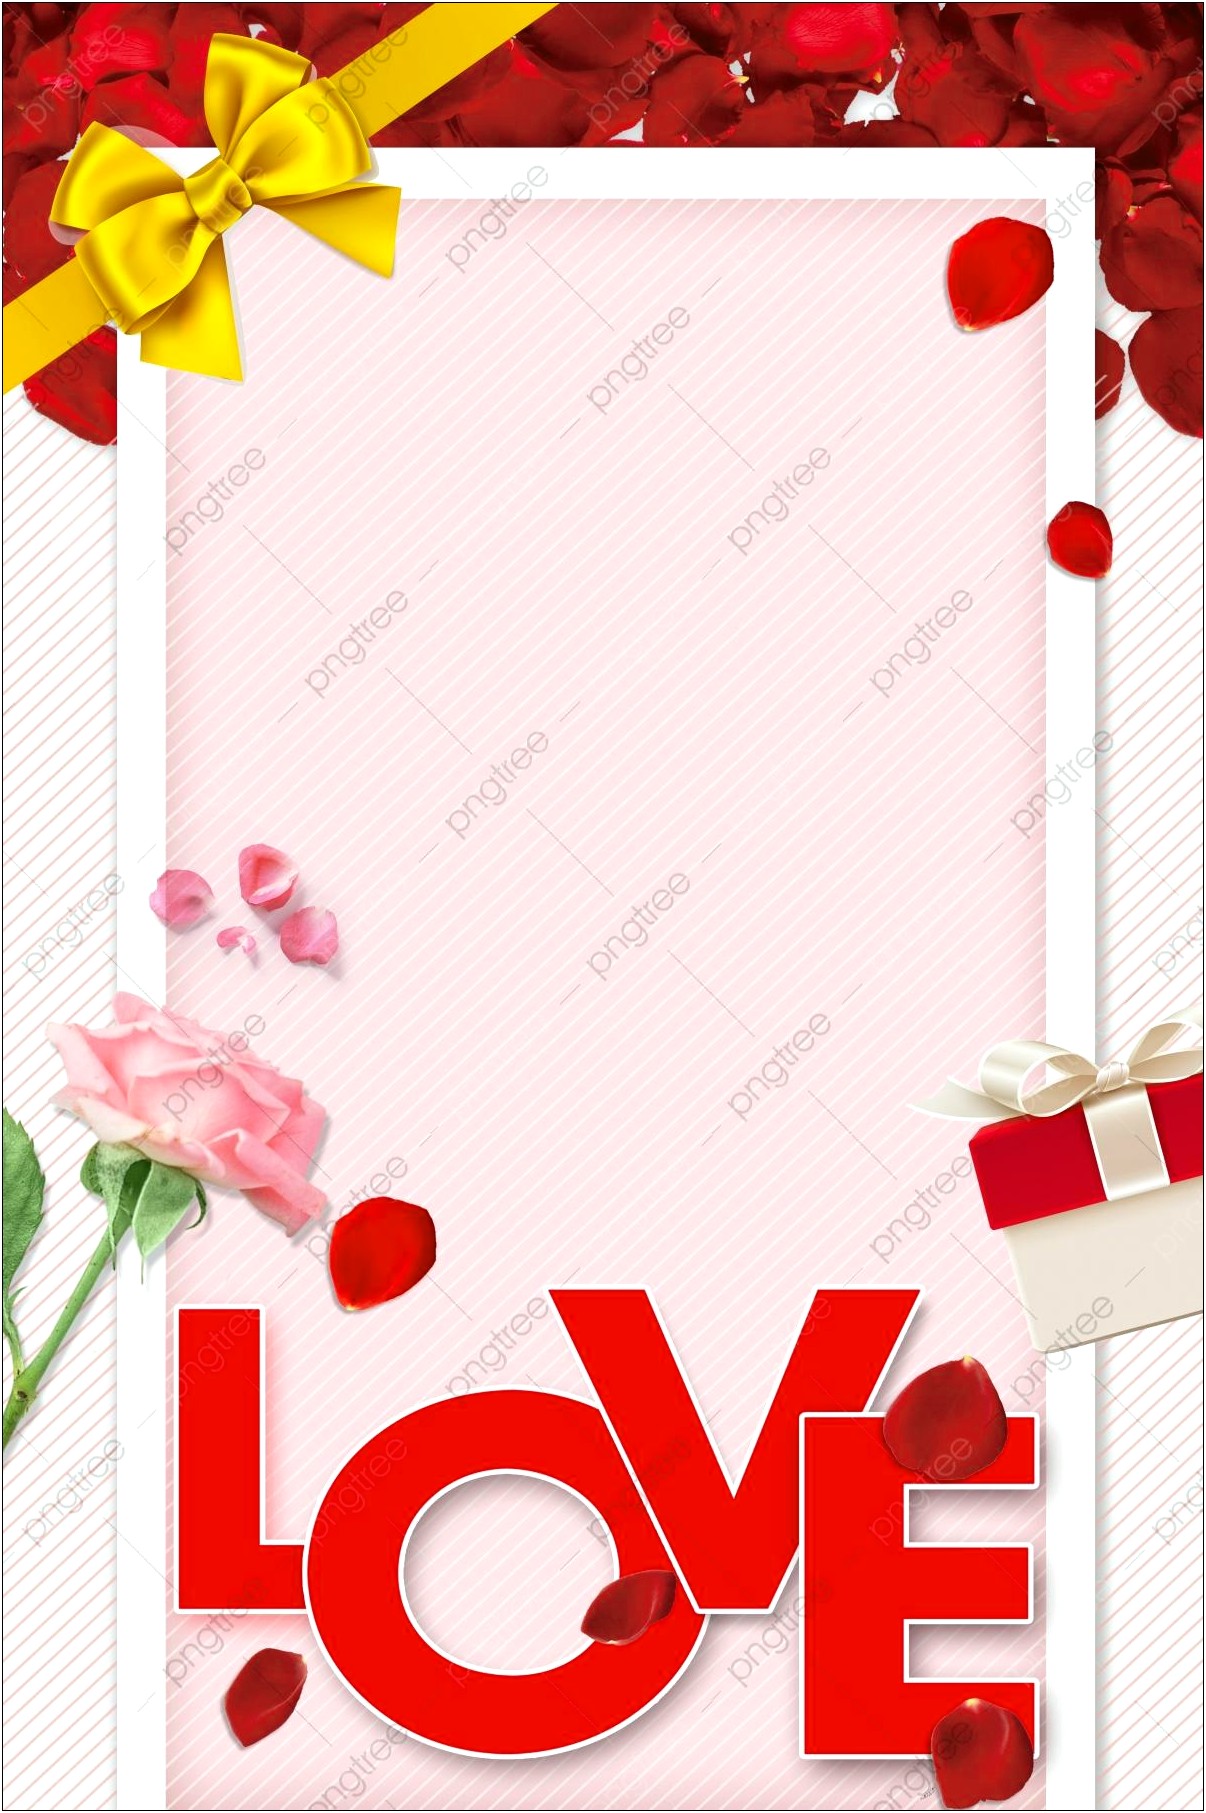 Love Letter Design Templates Free Download